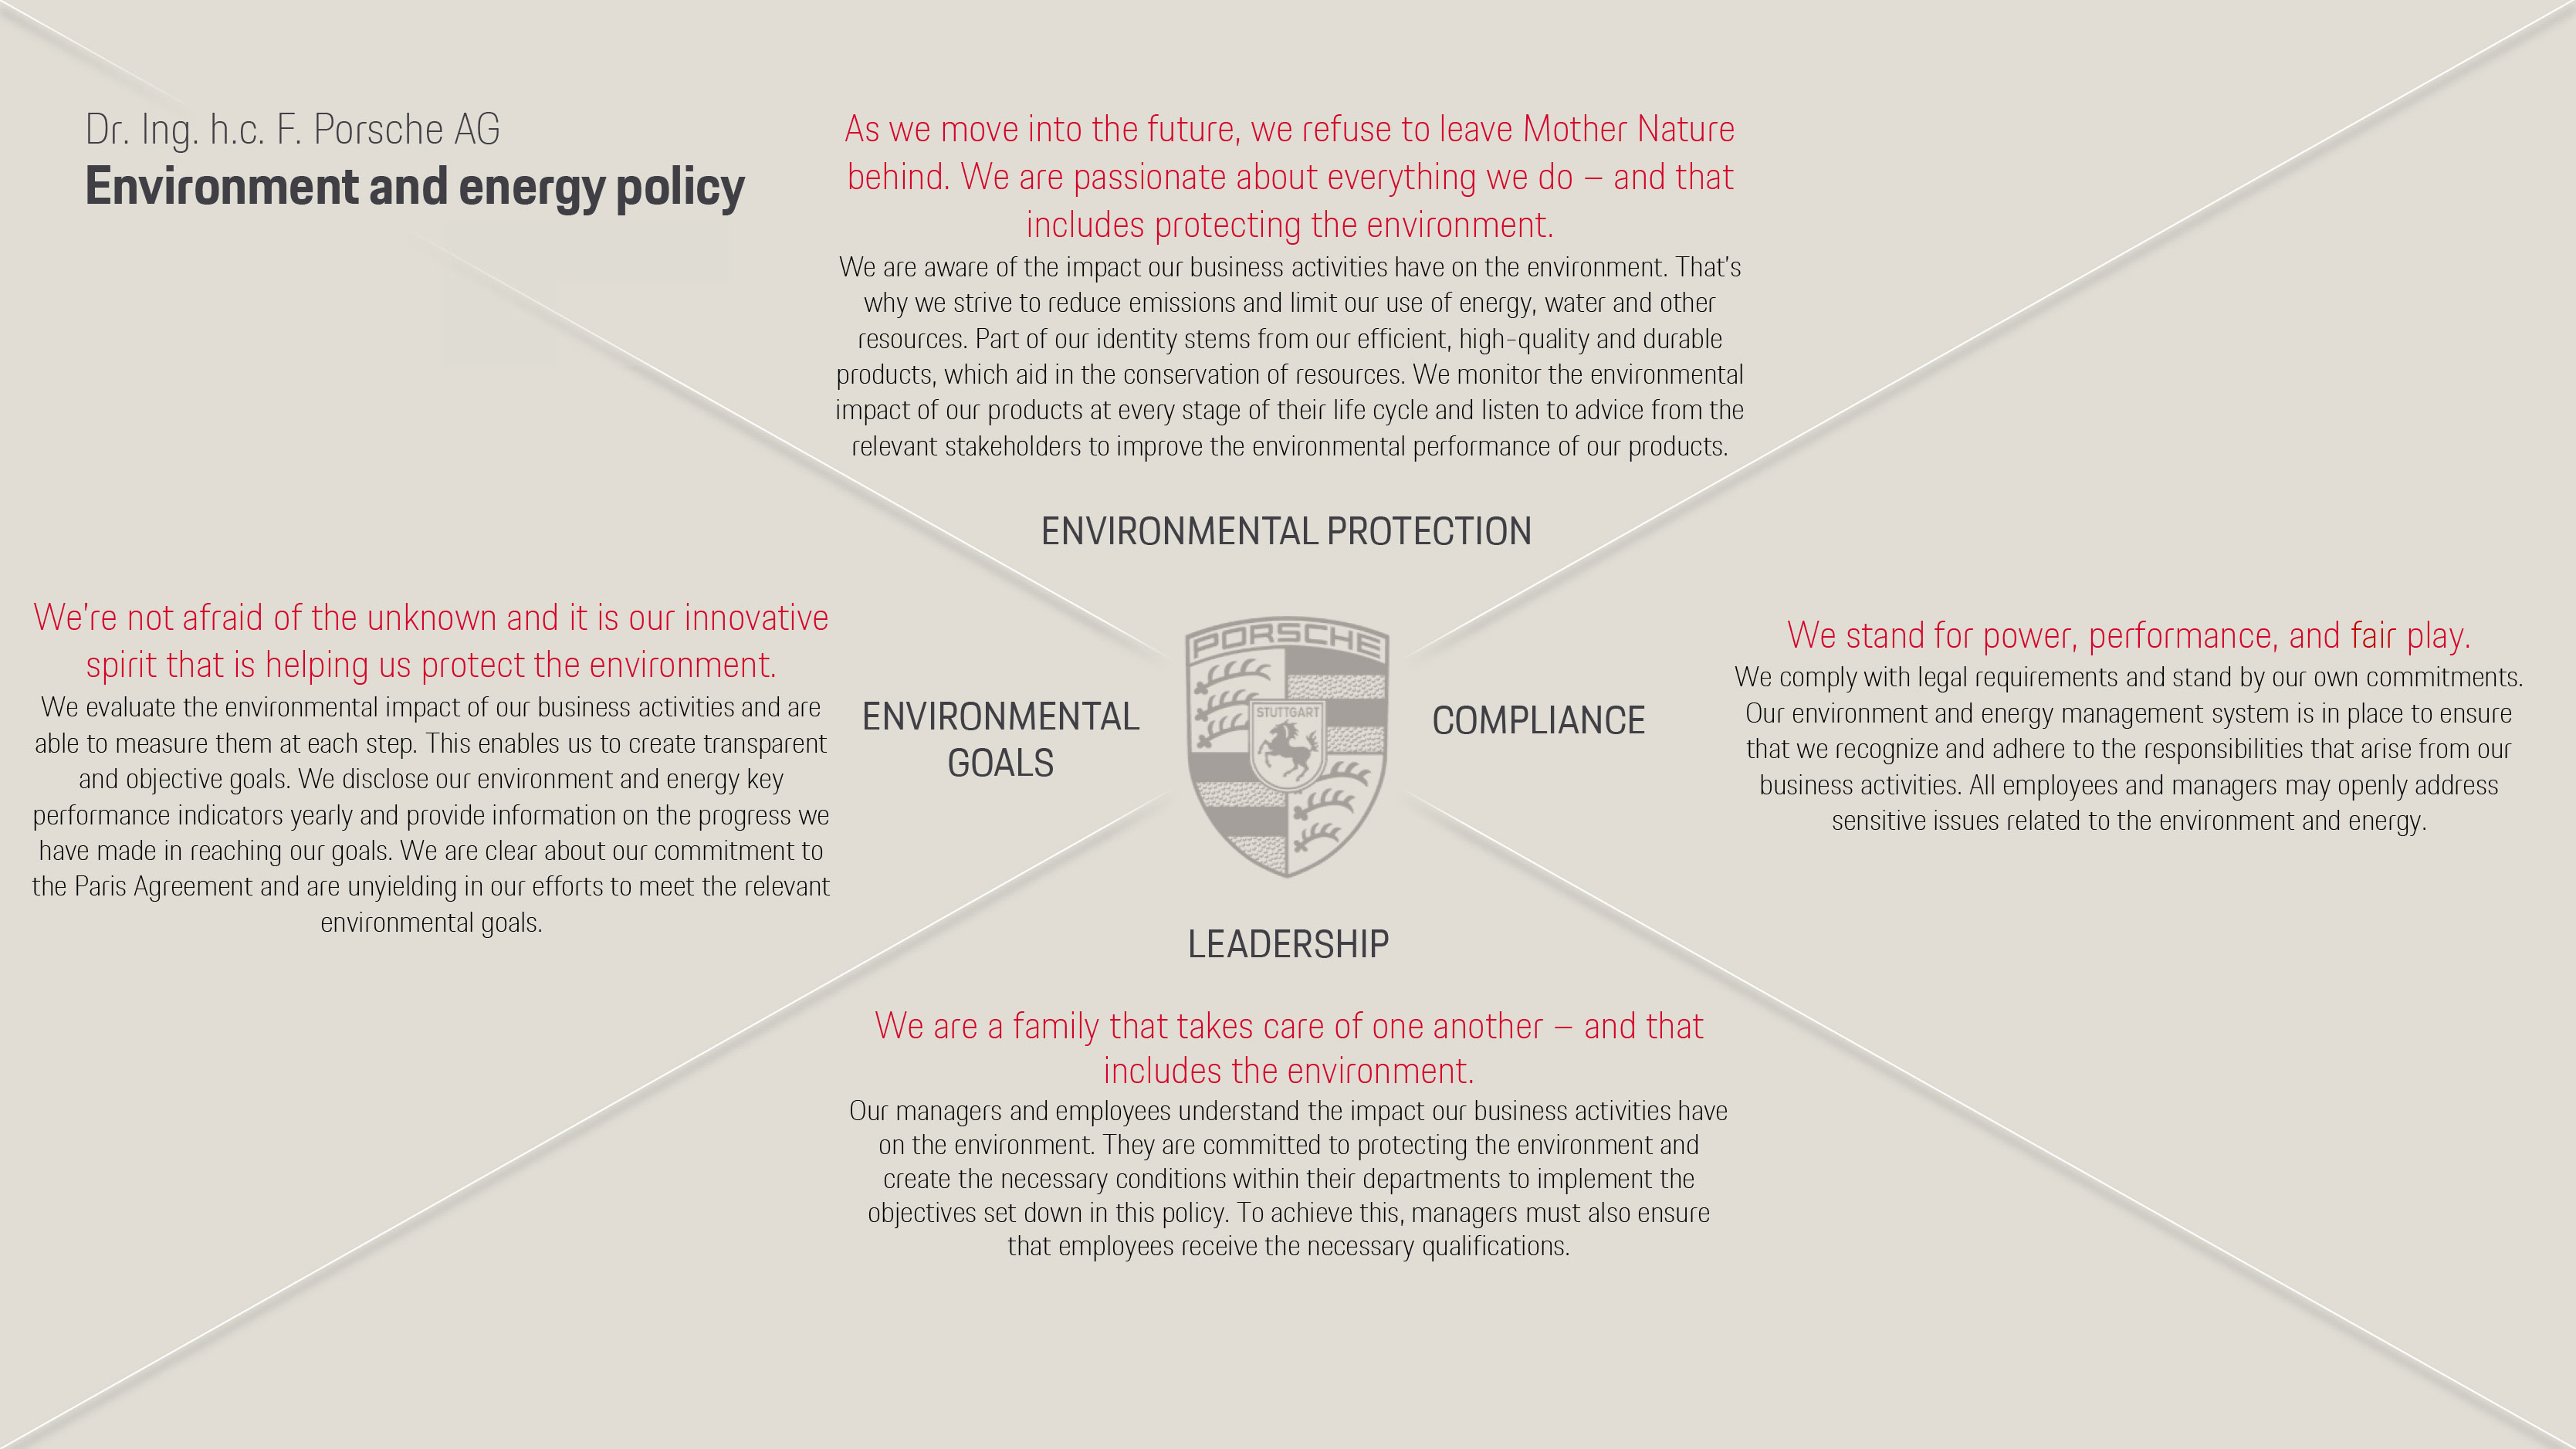 Environment and energy policy, 2020, Porsche AG